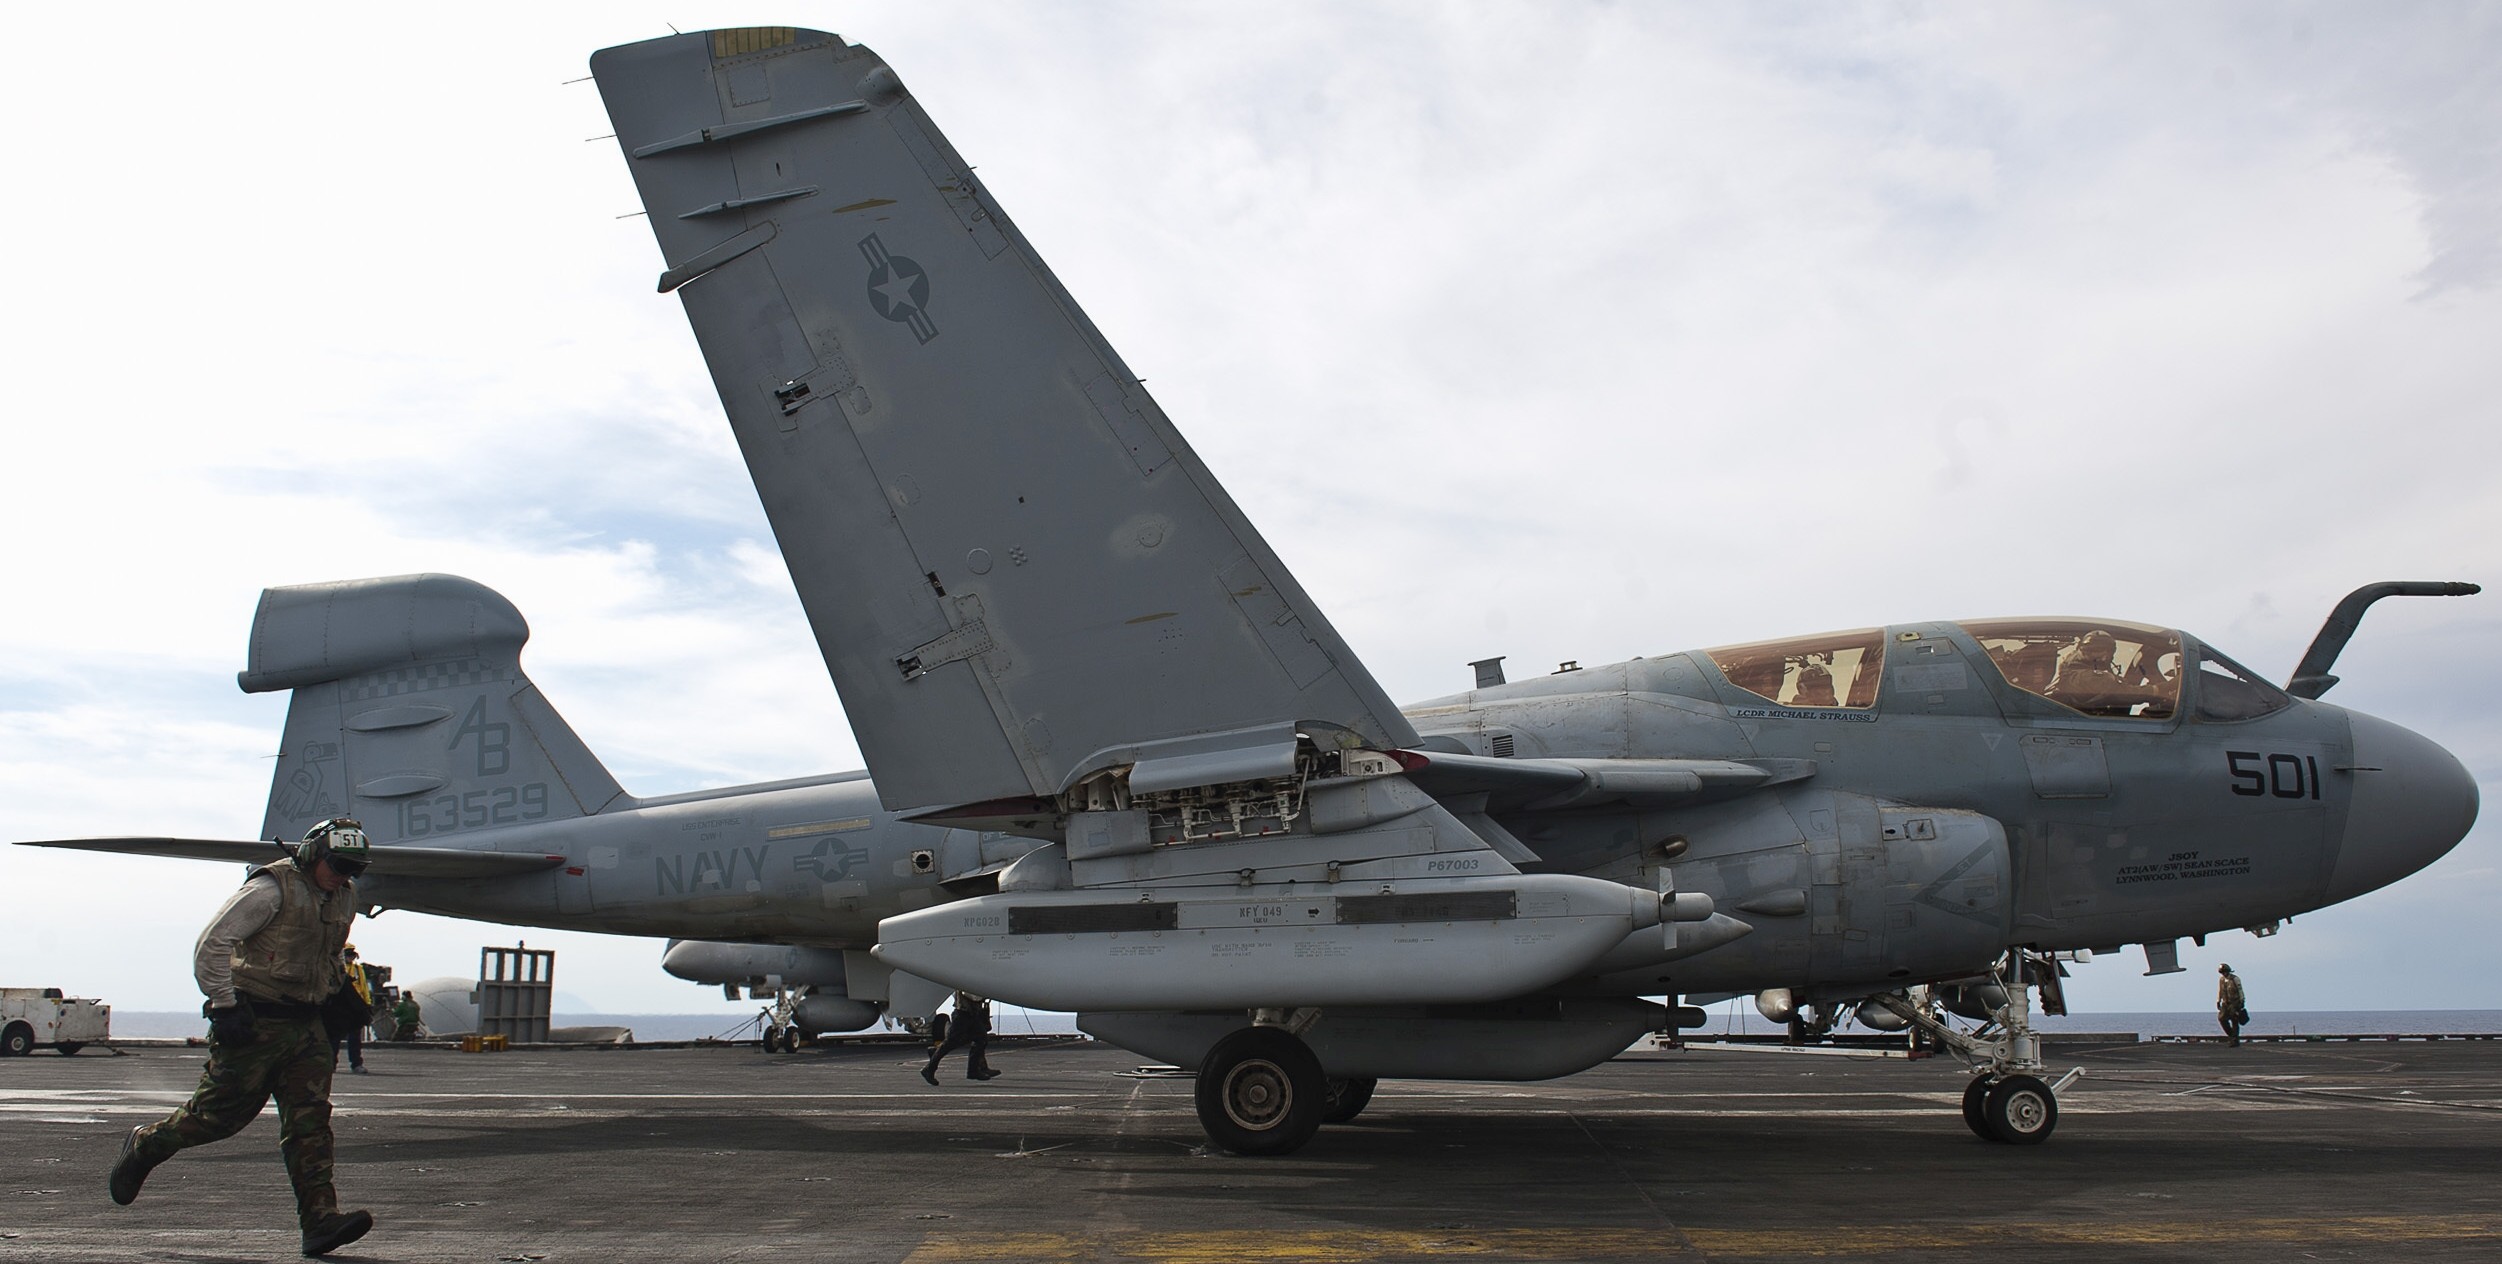 vaq-137 rooks electronic attack squadron us navy ea-6b prowler carrier air wing cvw-1 uss enterprise cvn-65 37